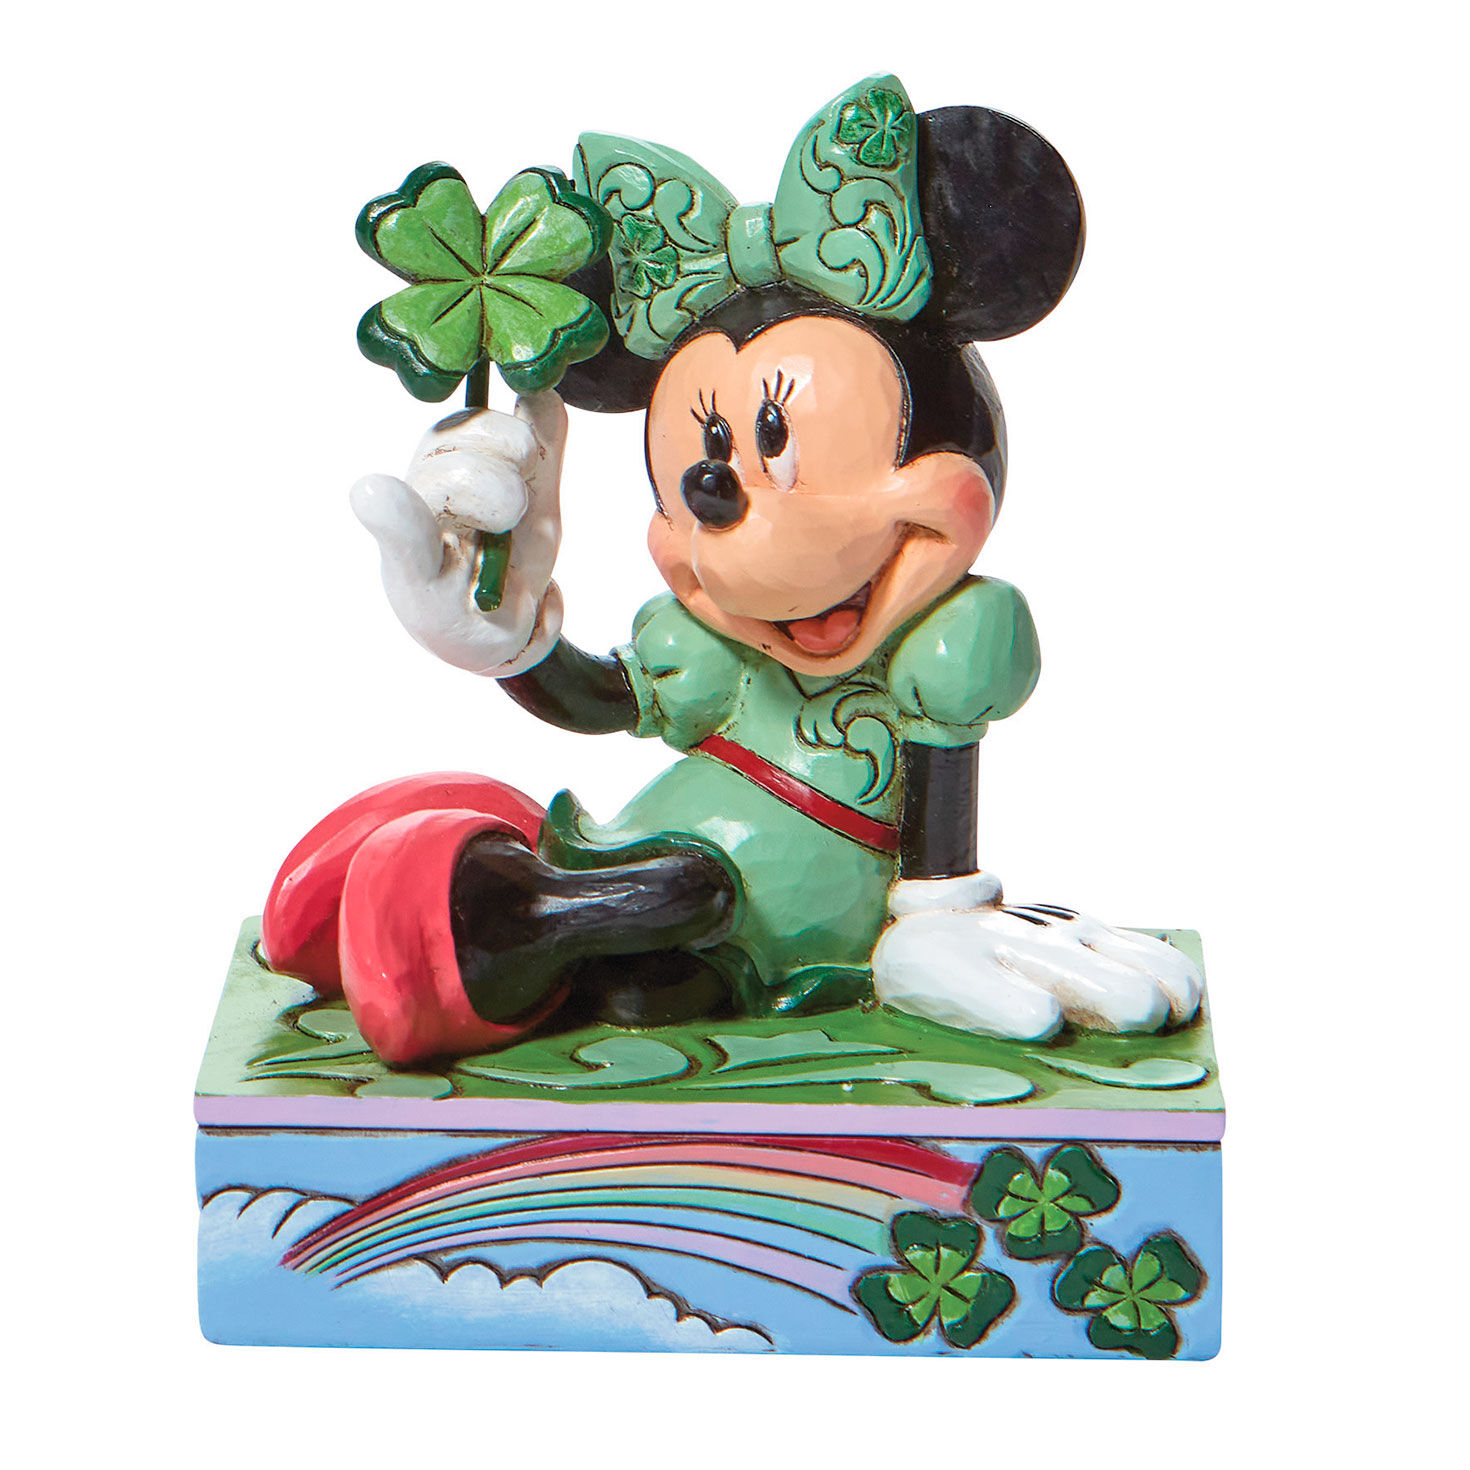 Mickey & Minnie Halloween – Jim Shore